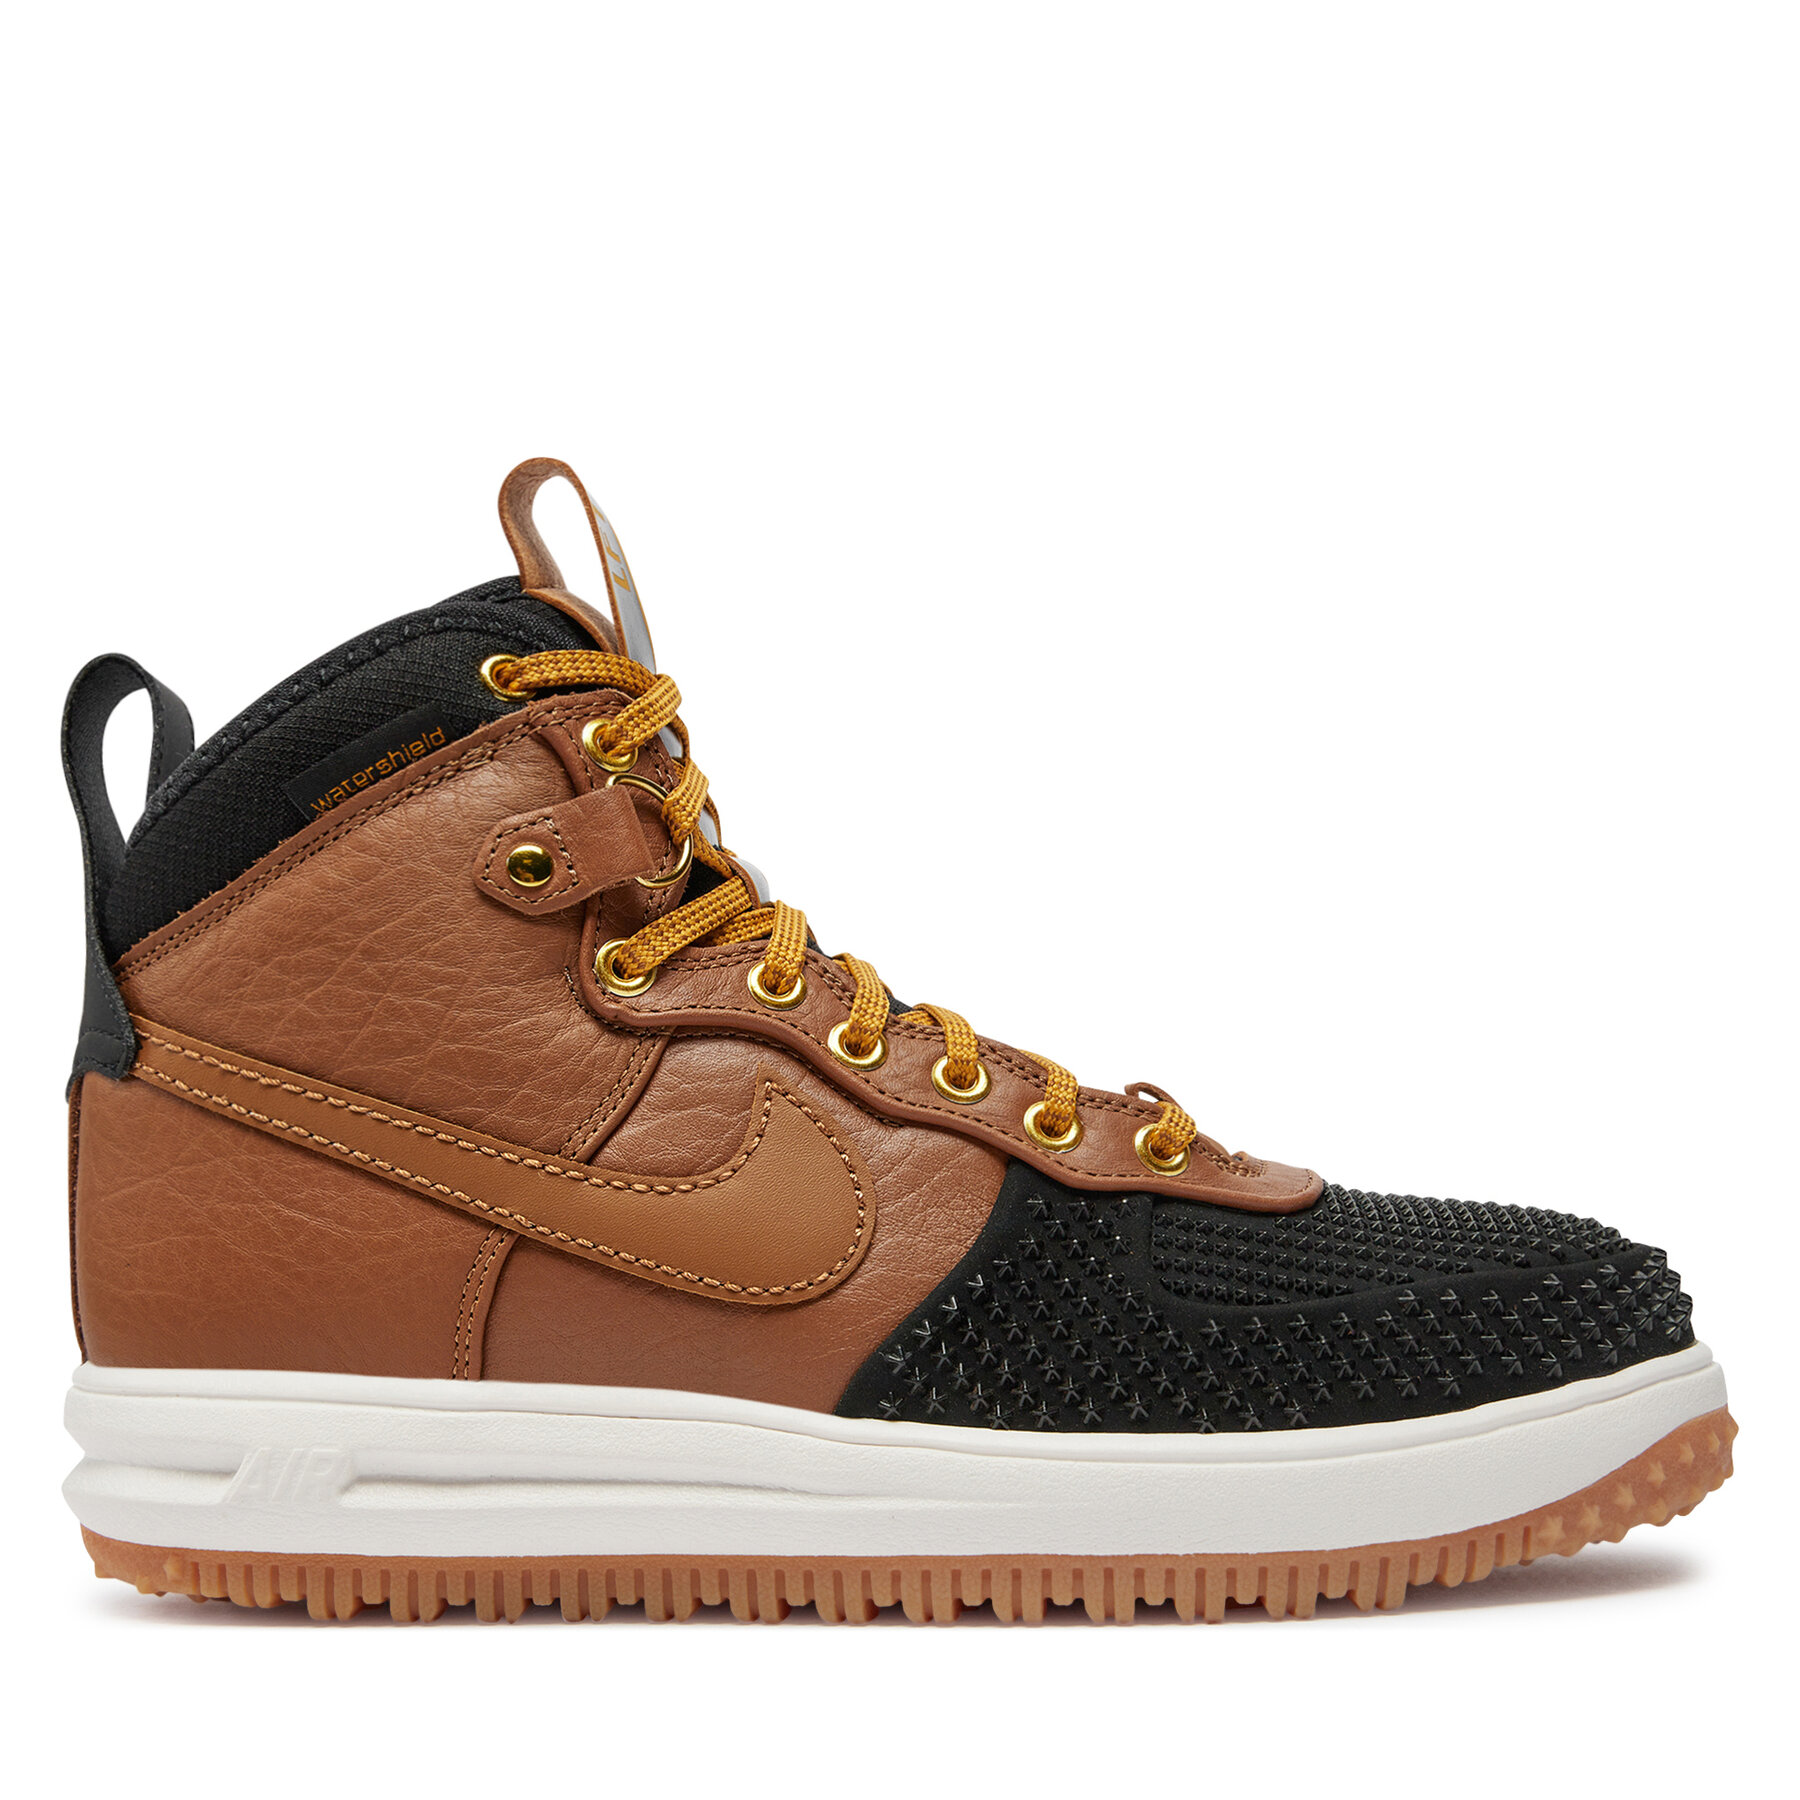 Schuhe Nike Lunar Force 1 Duckboot 805899 202 Ale Brown/Ale Brown/Black von Nike